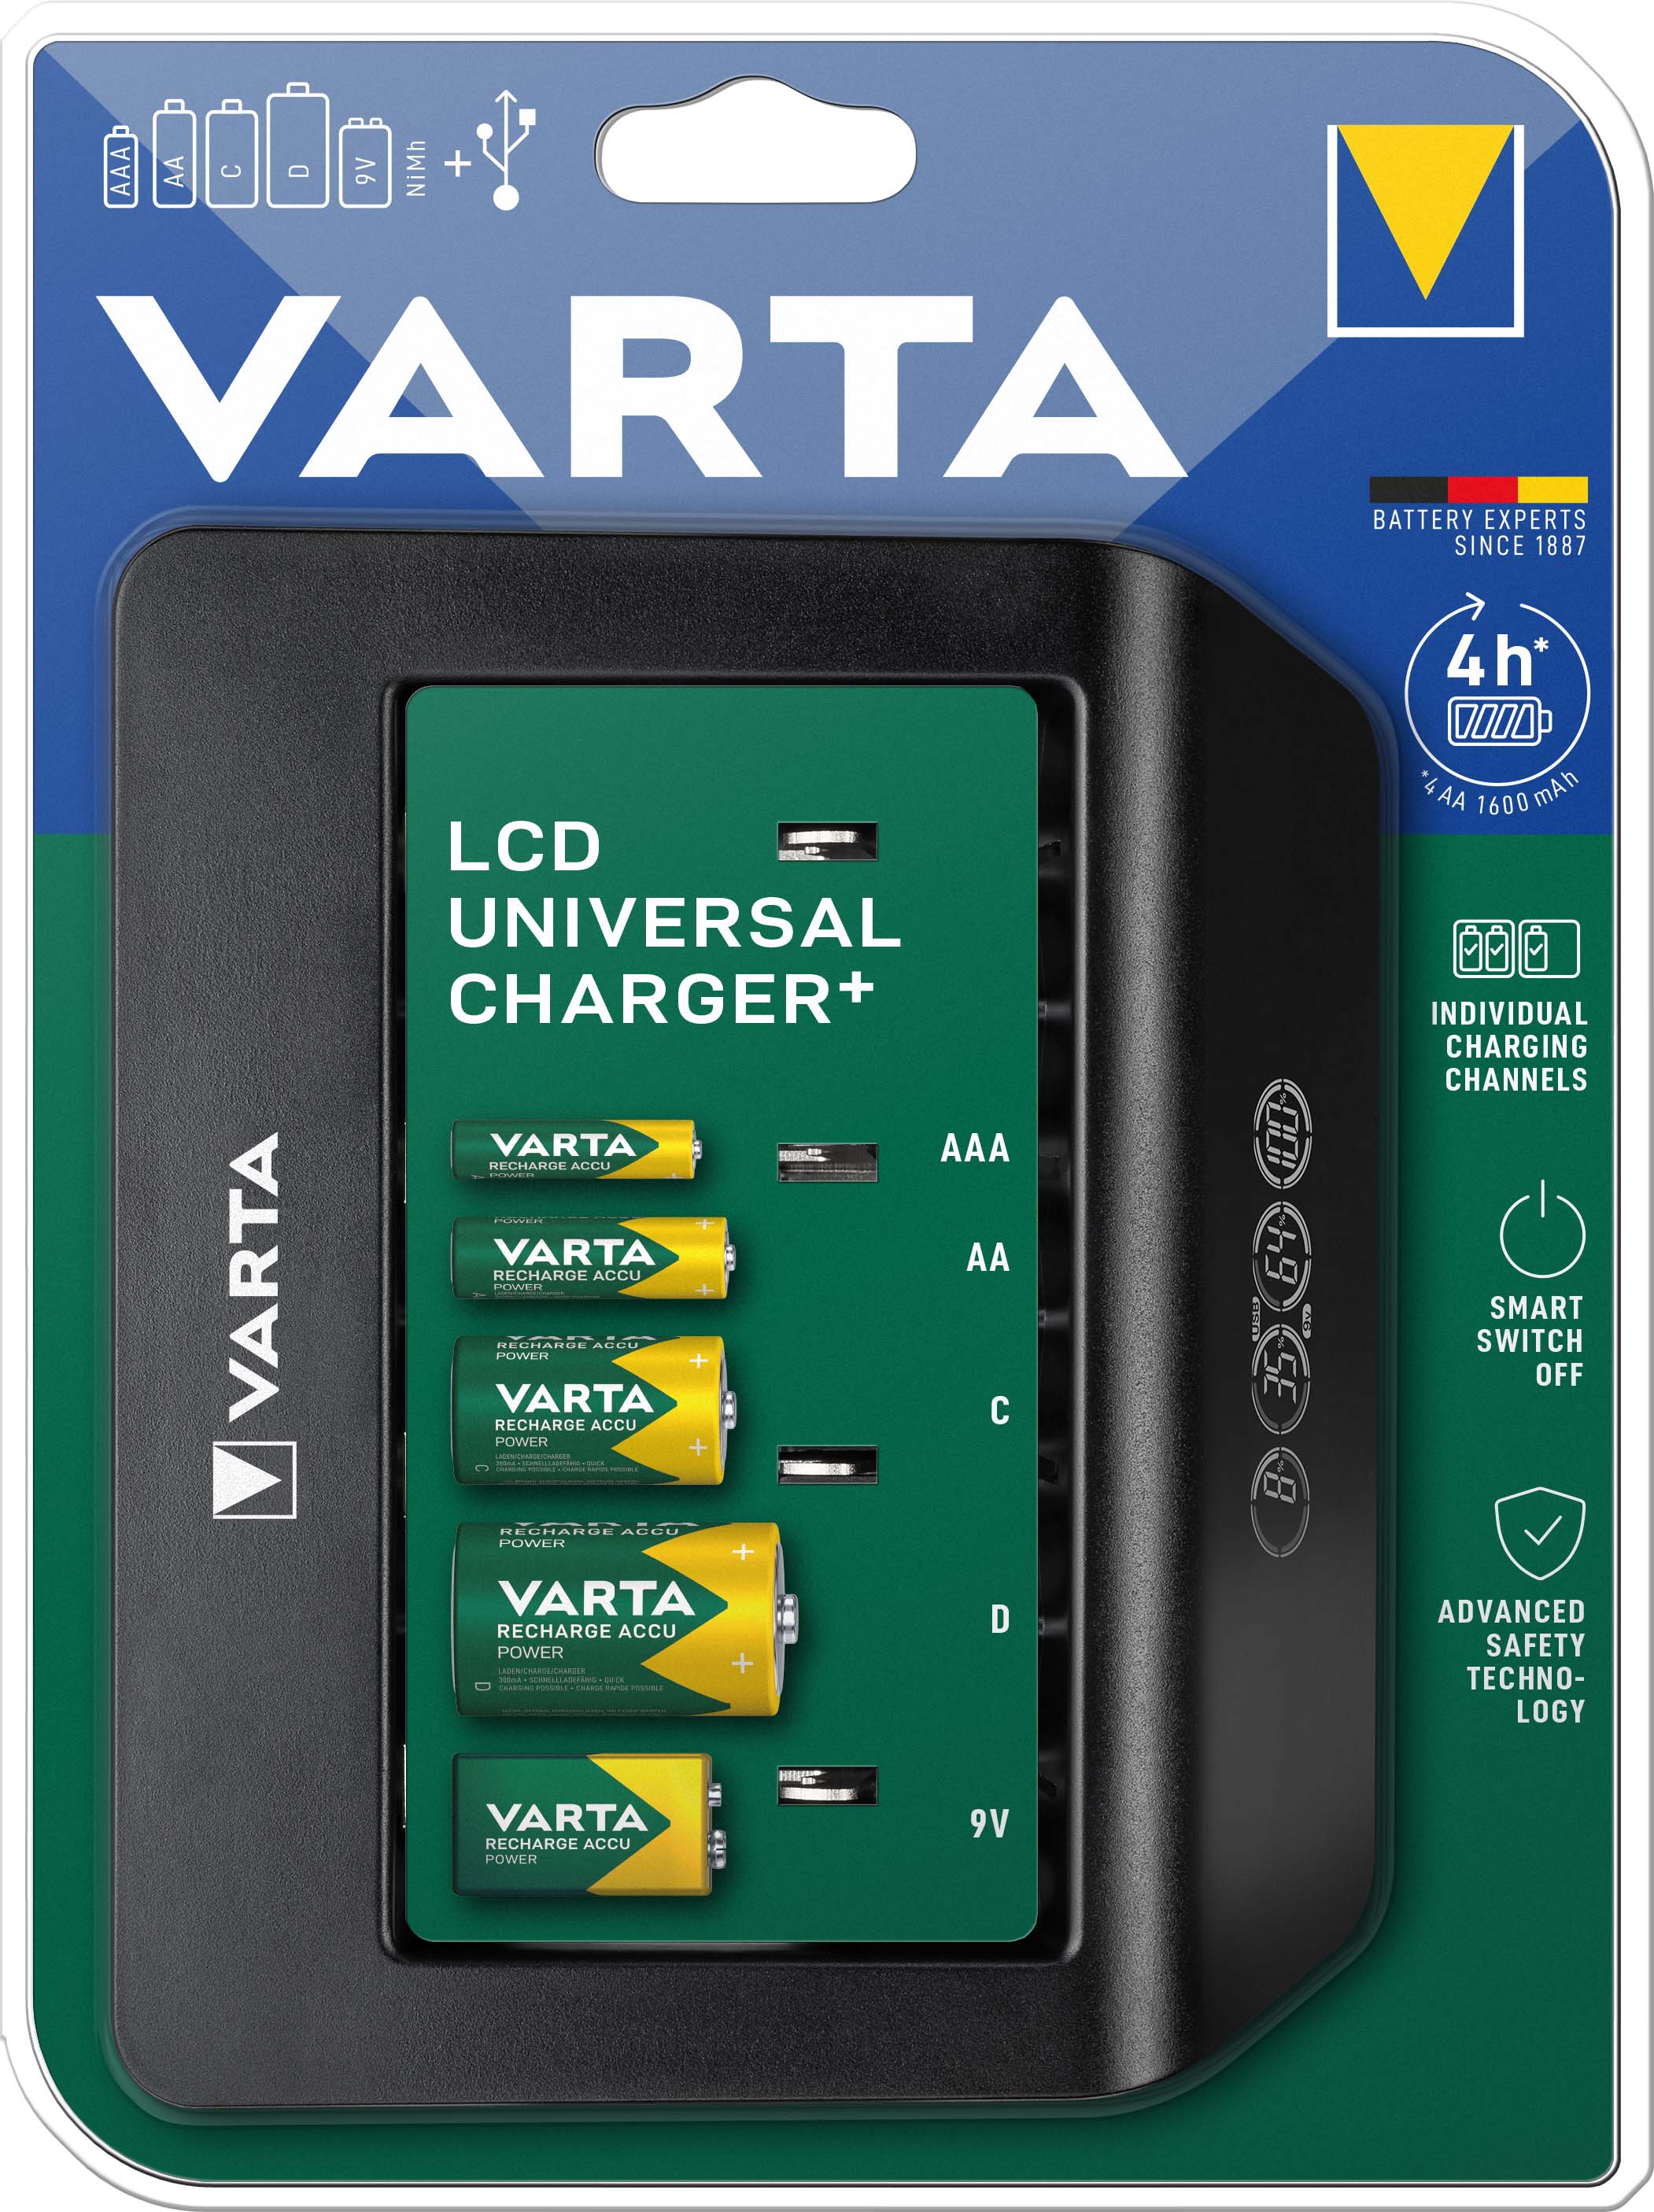 Varta Cons.Varta LCD Universal Charger+  57688101401